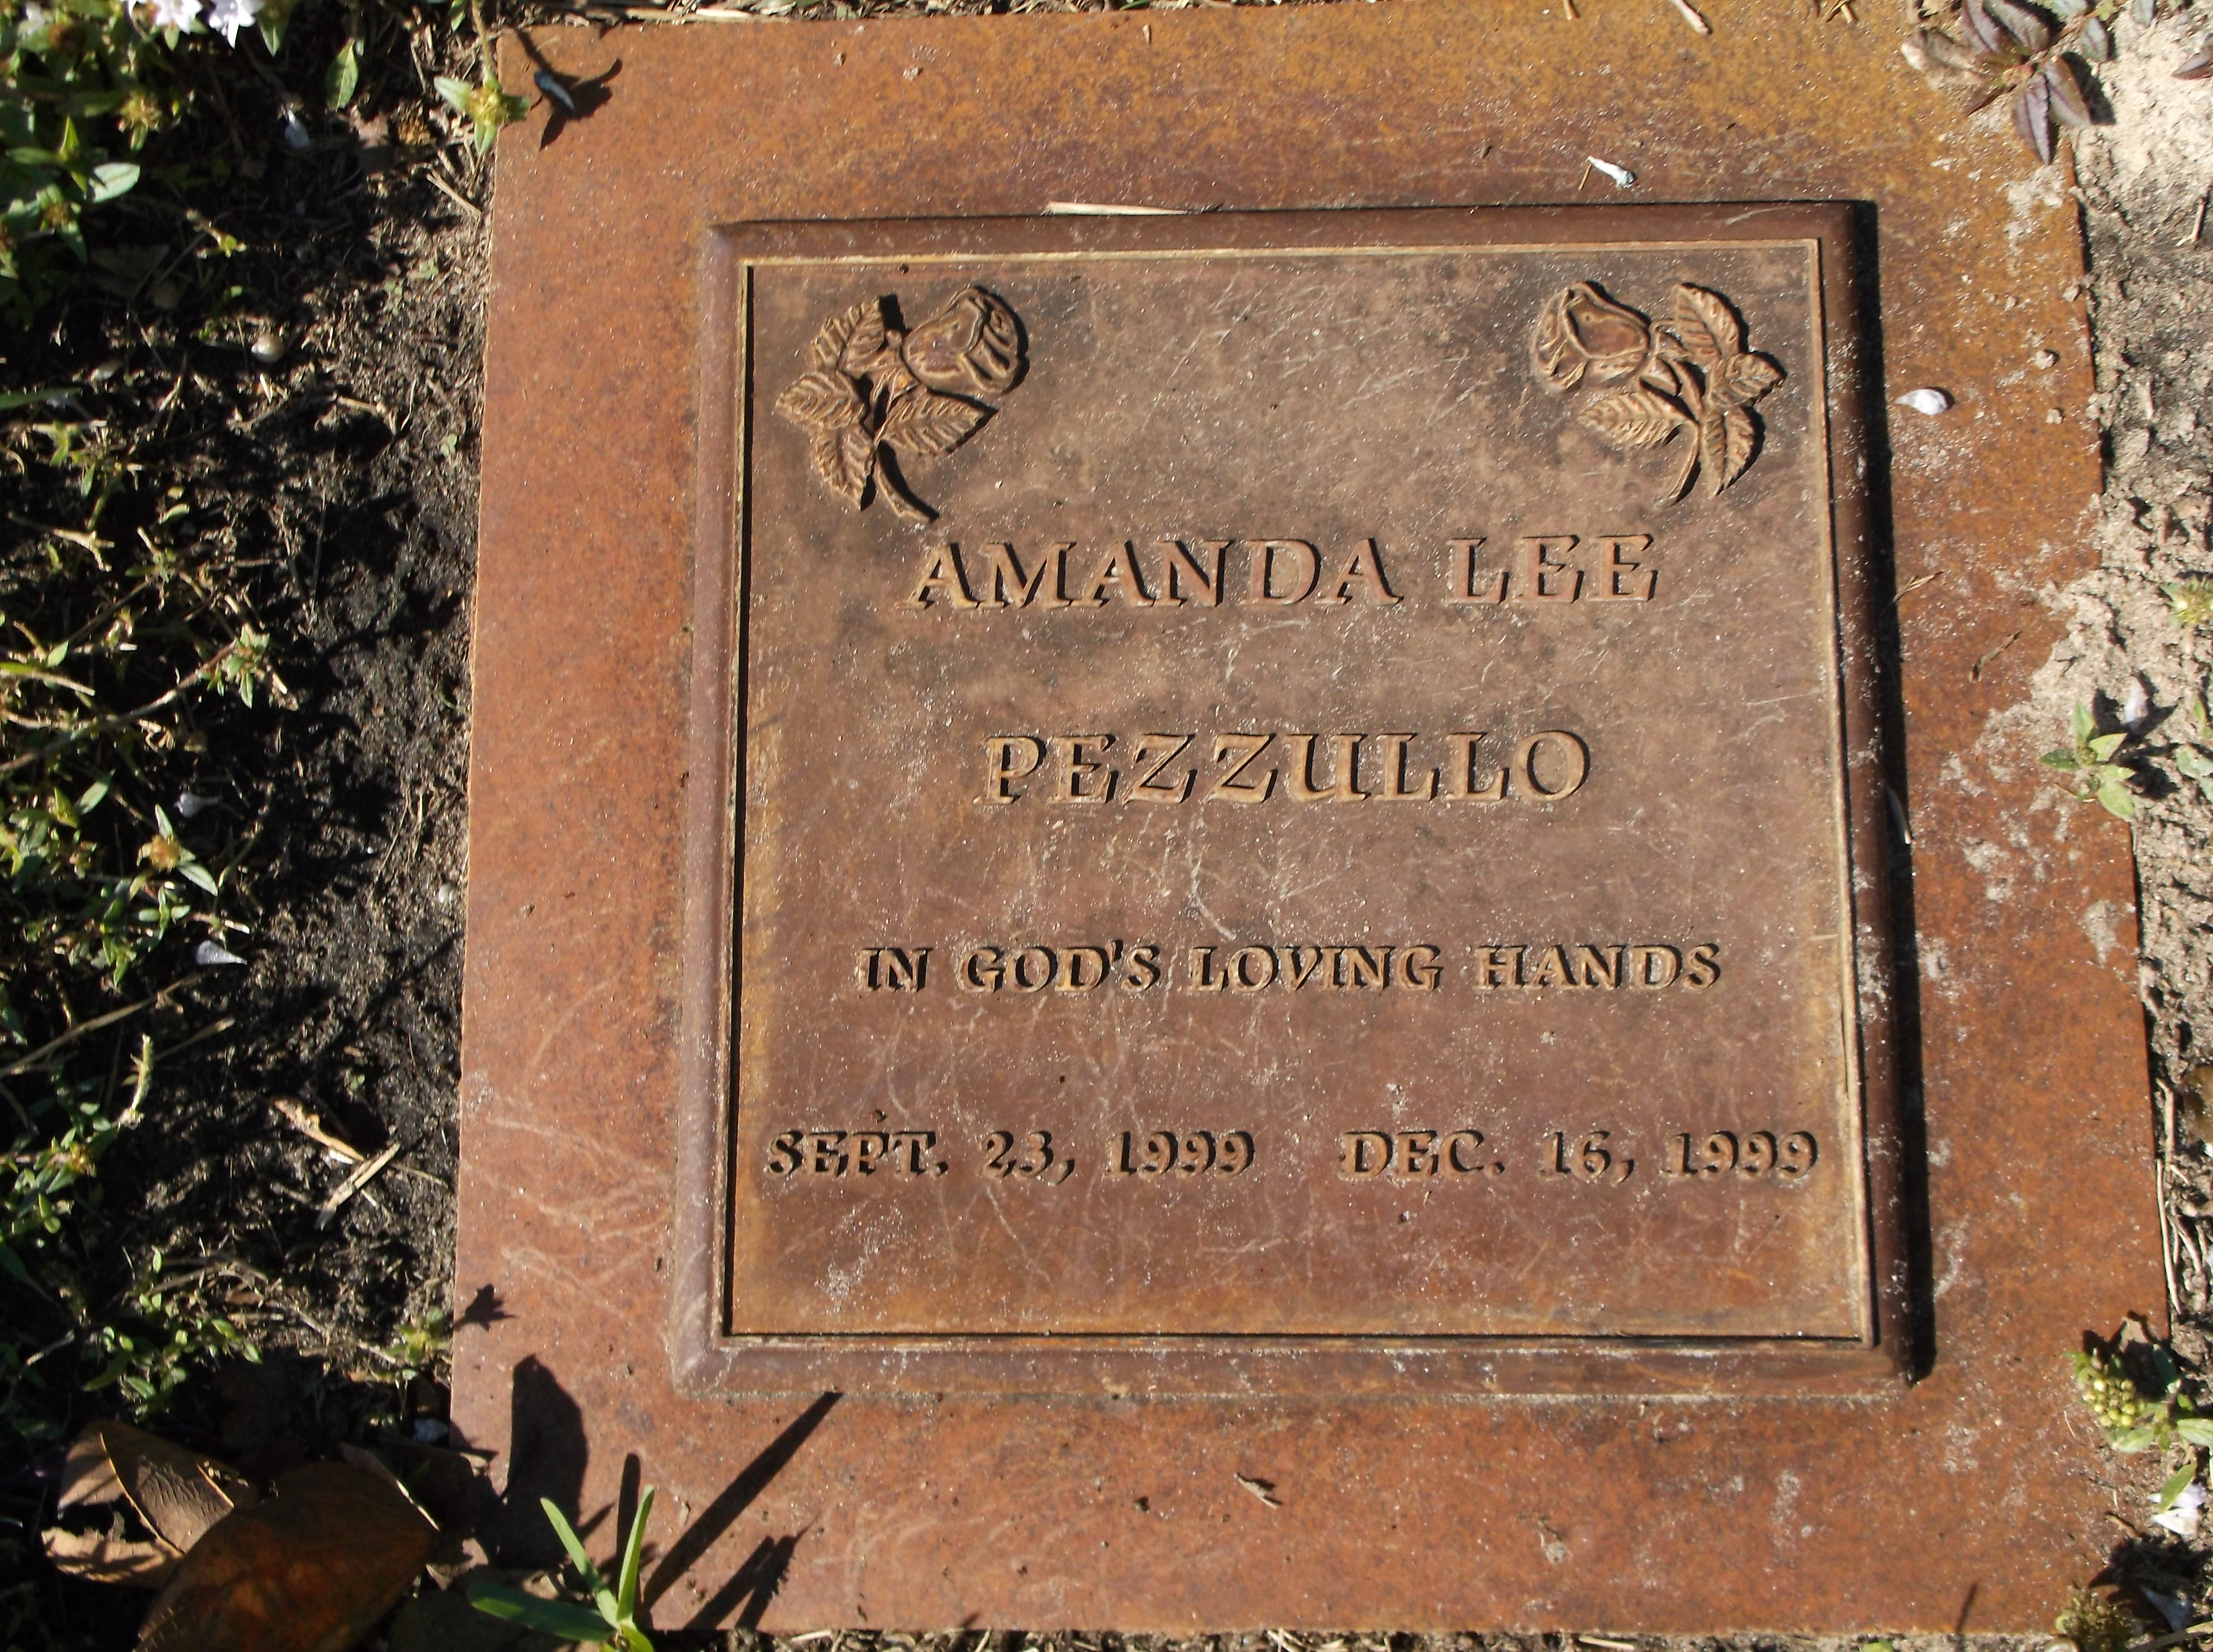 Amanda Lee Pezzullo